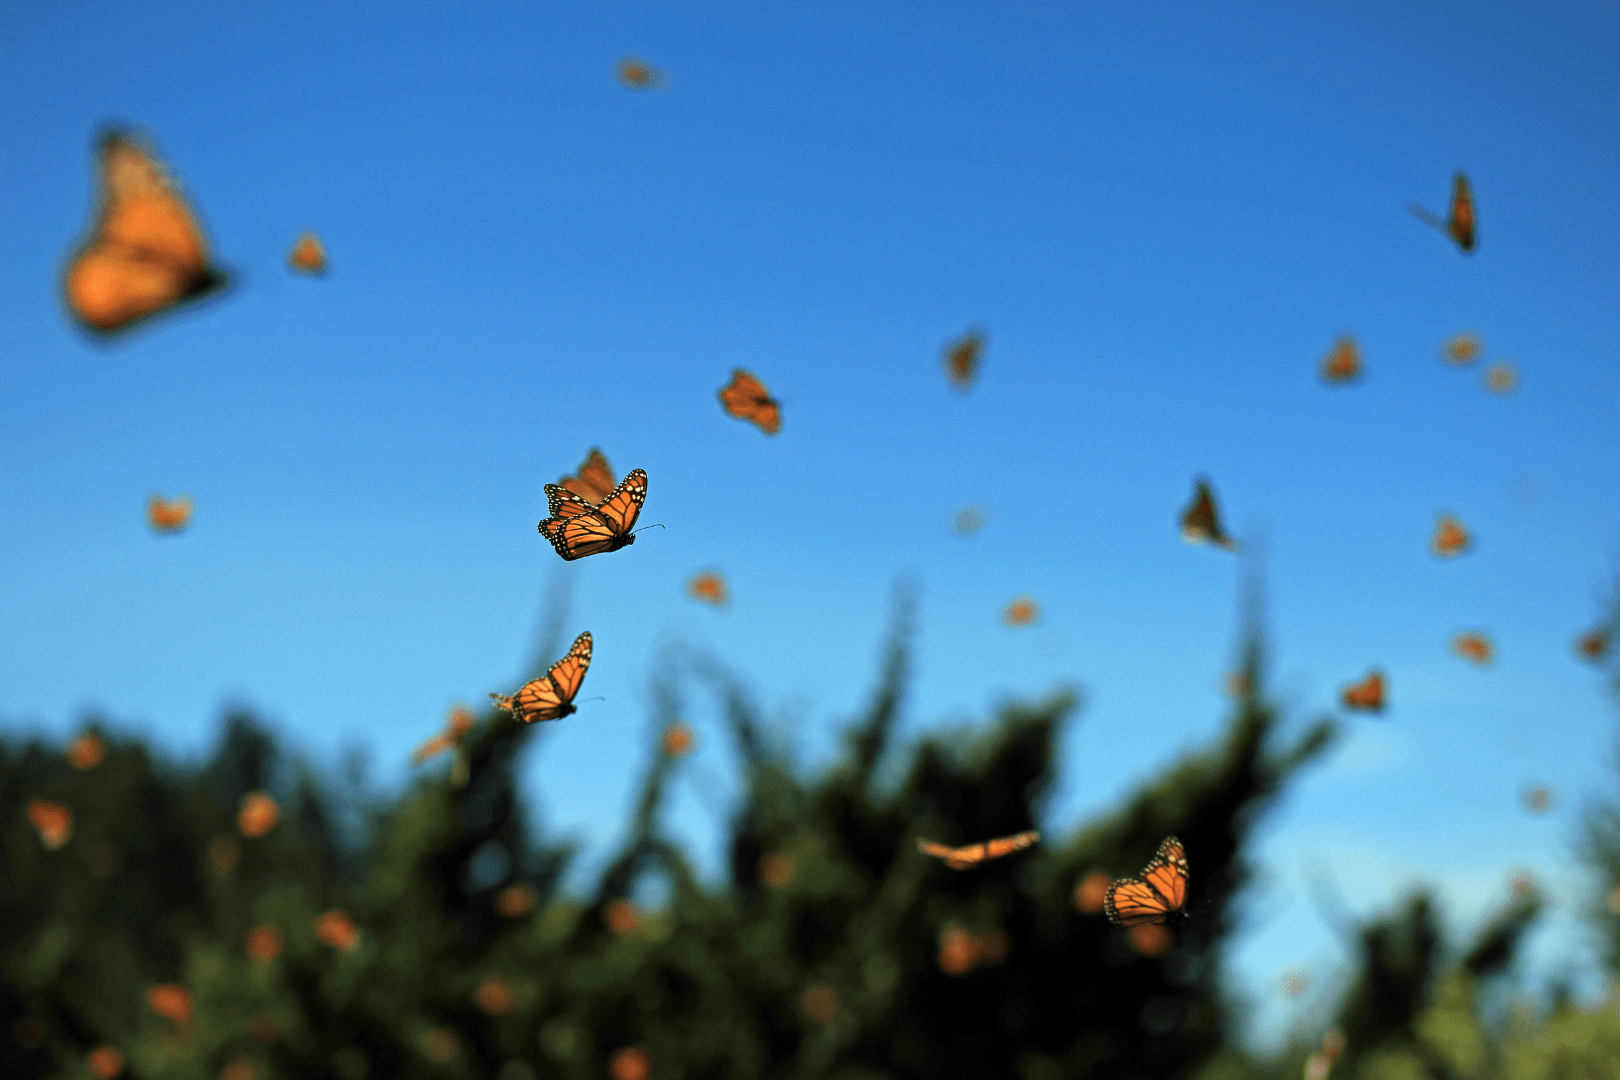 monarchs in flight in front of a clear sky